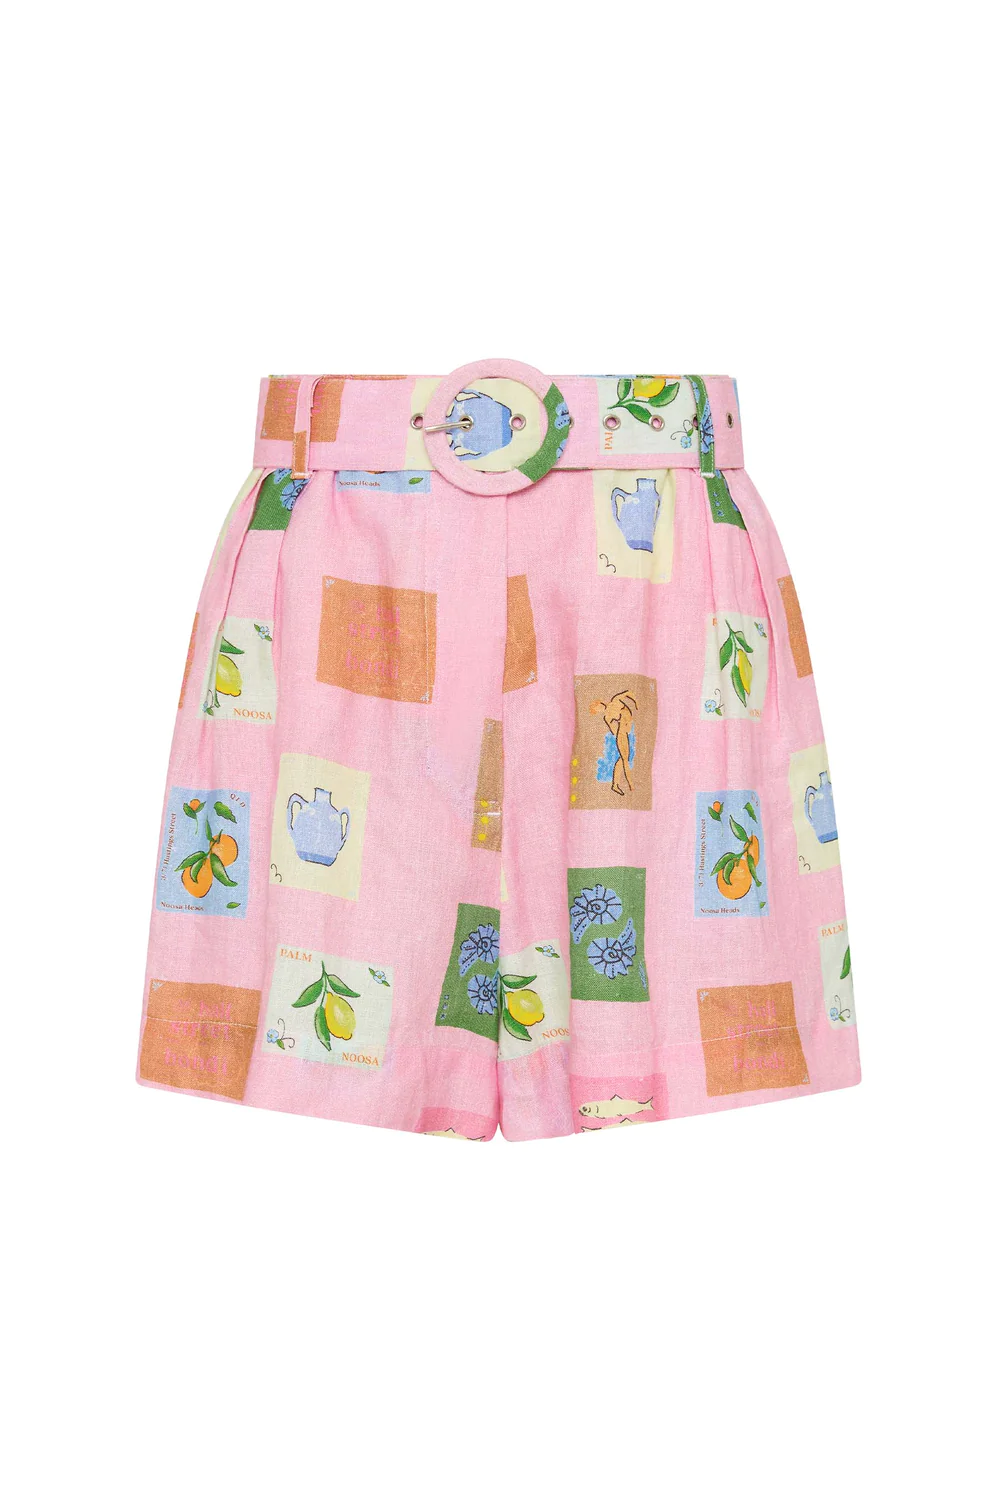 palm-noosa-rummy-shorts-pink-emblem